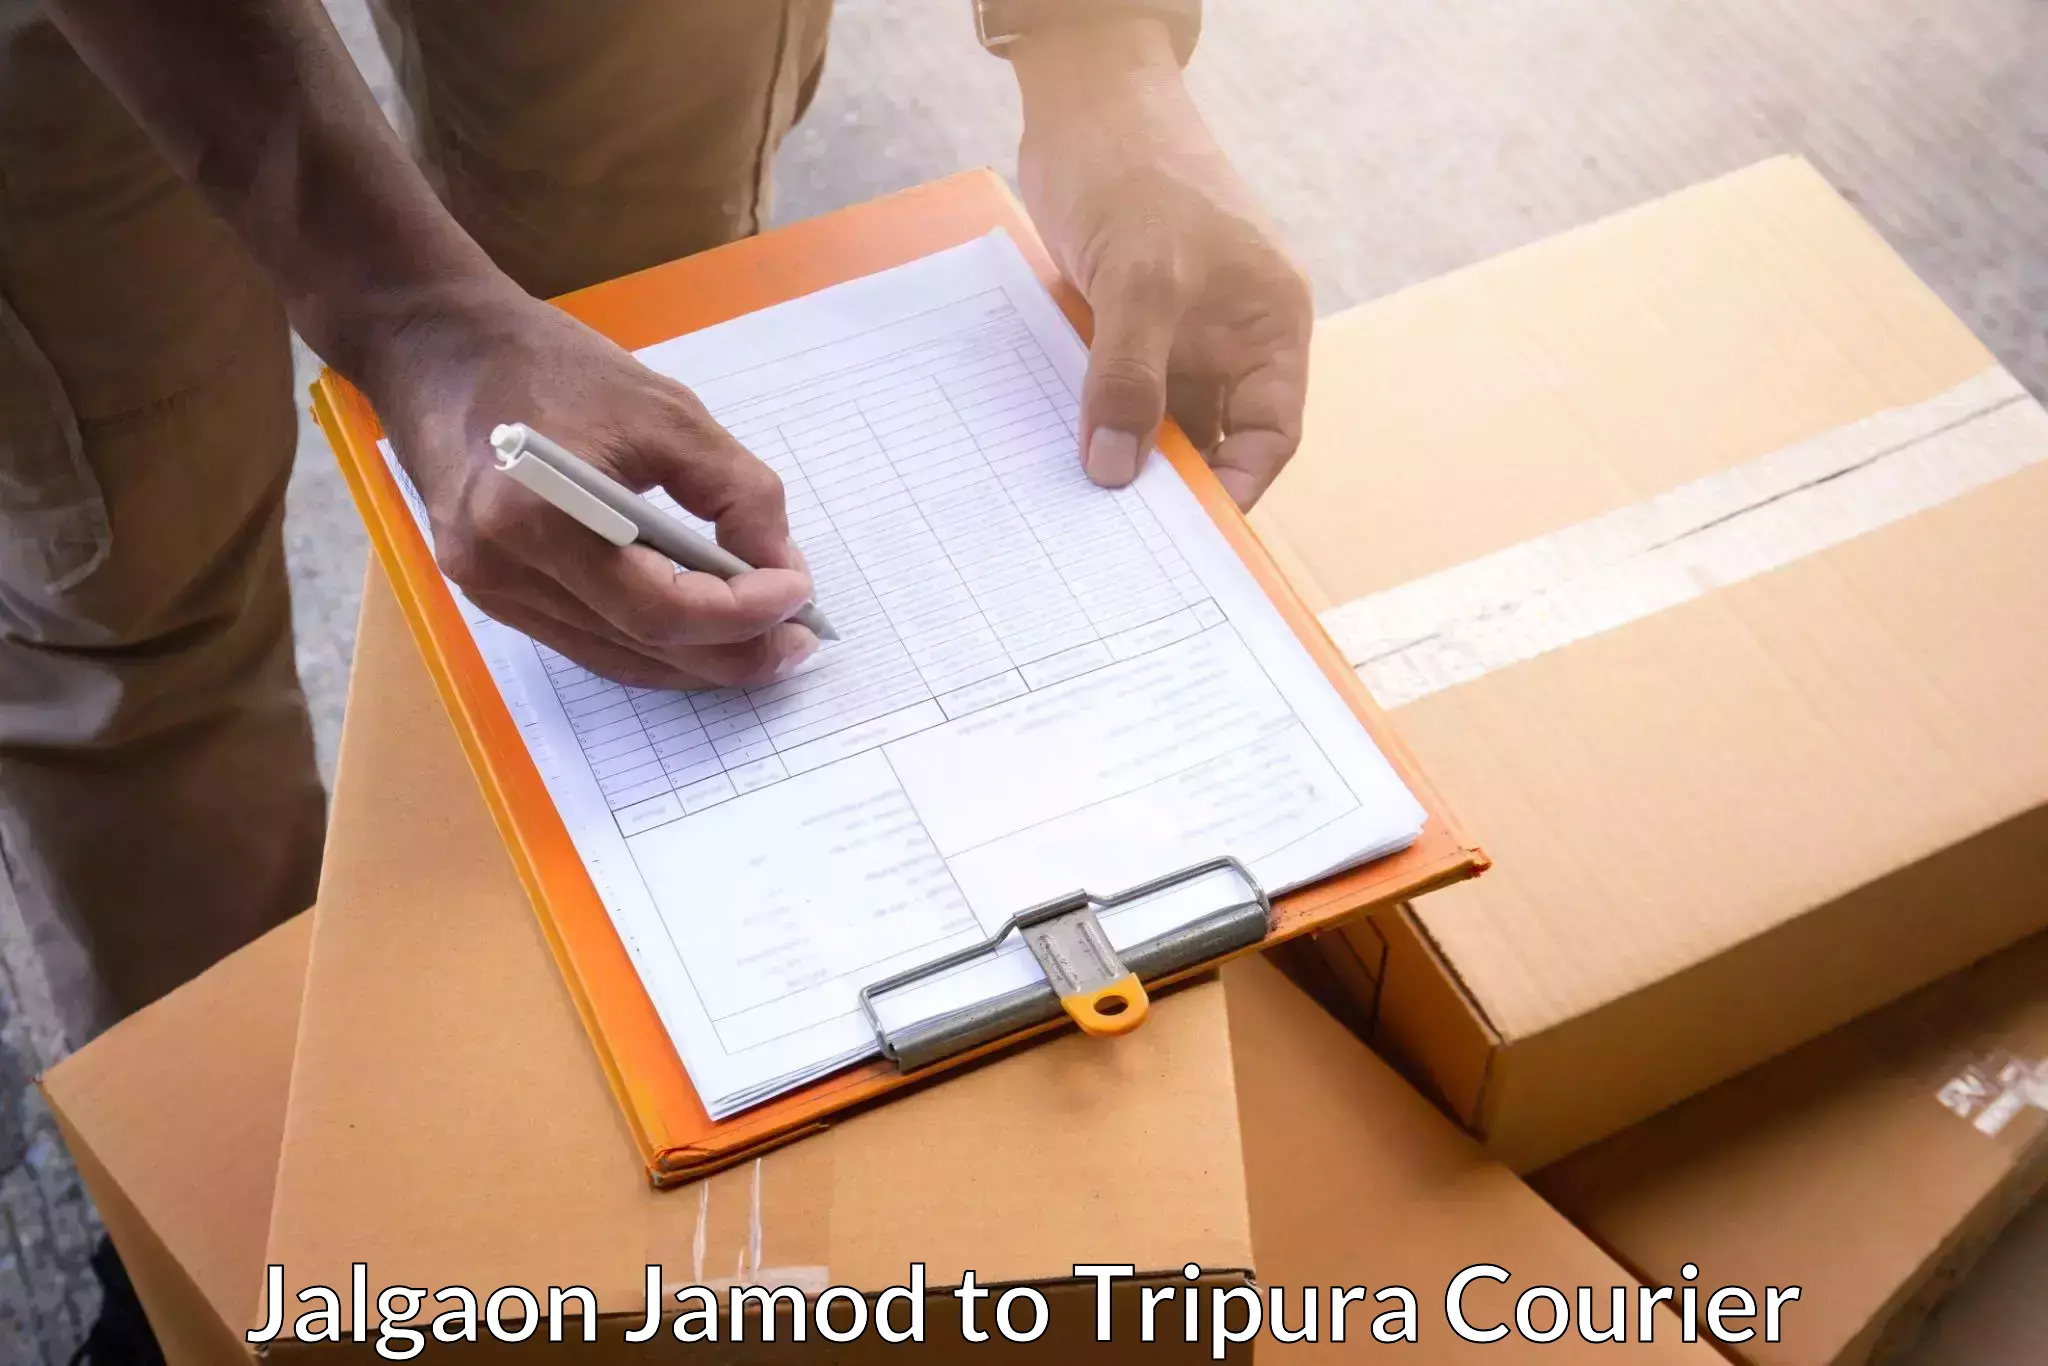 Modern delivery methods Jalgaon Jamod to Tripura